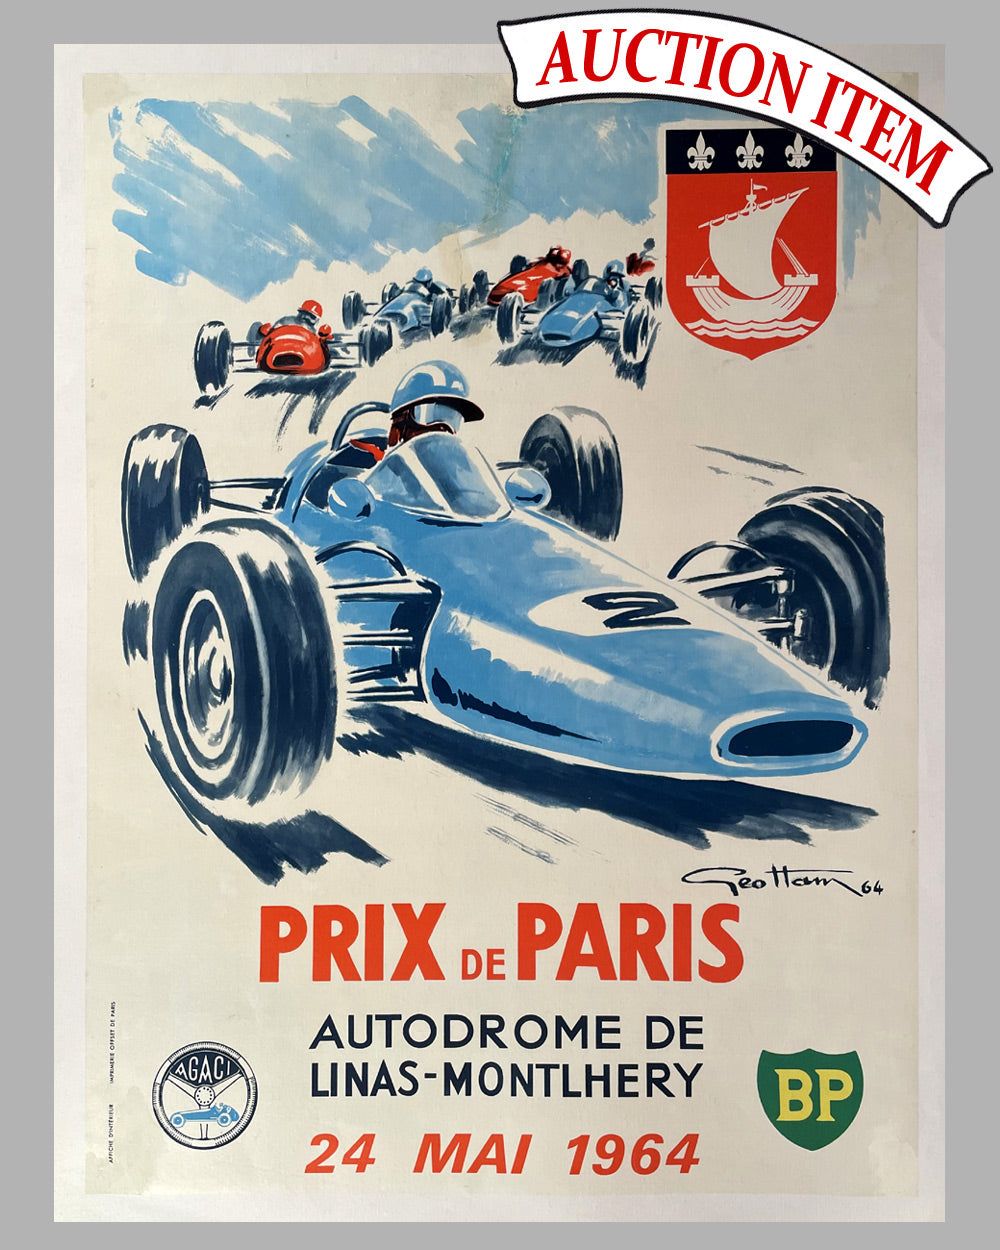 Prix de Paris 1964 original race poster, artwork by Geo Ham